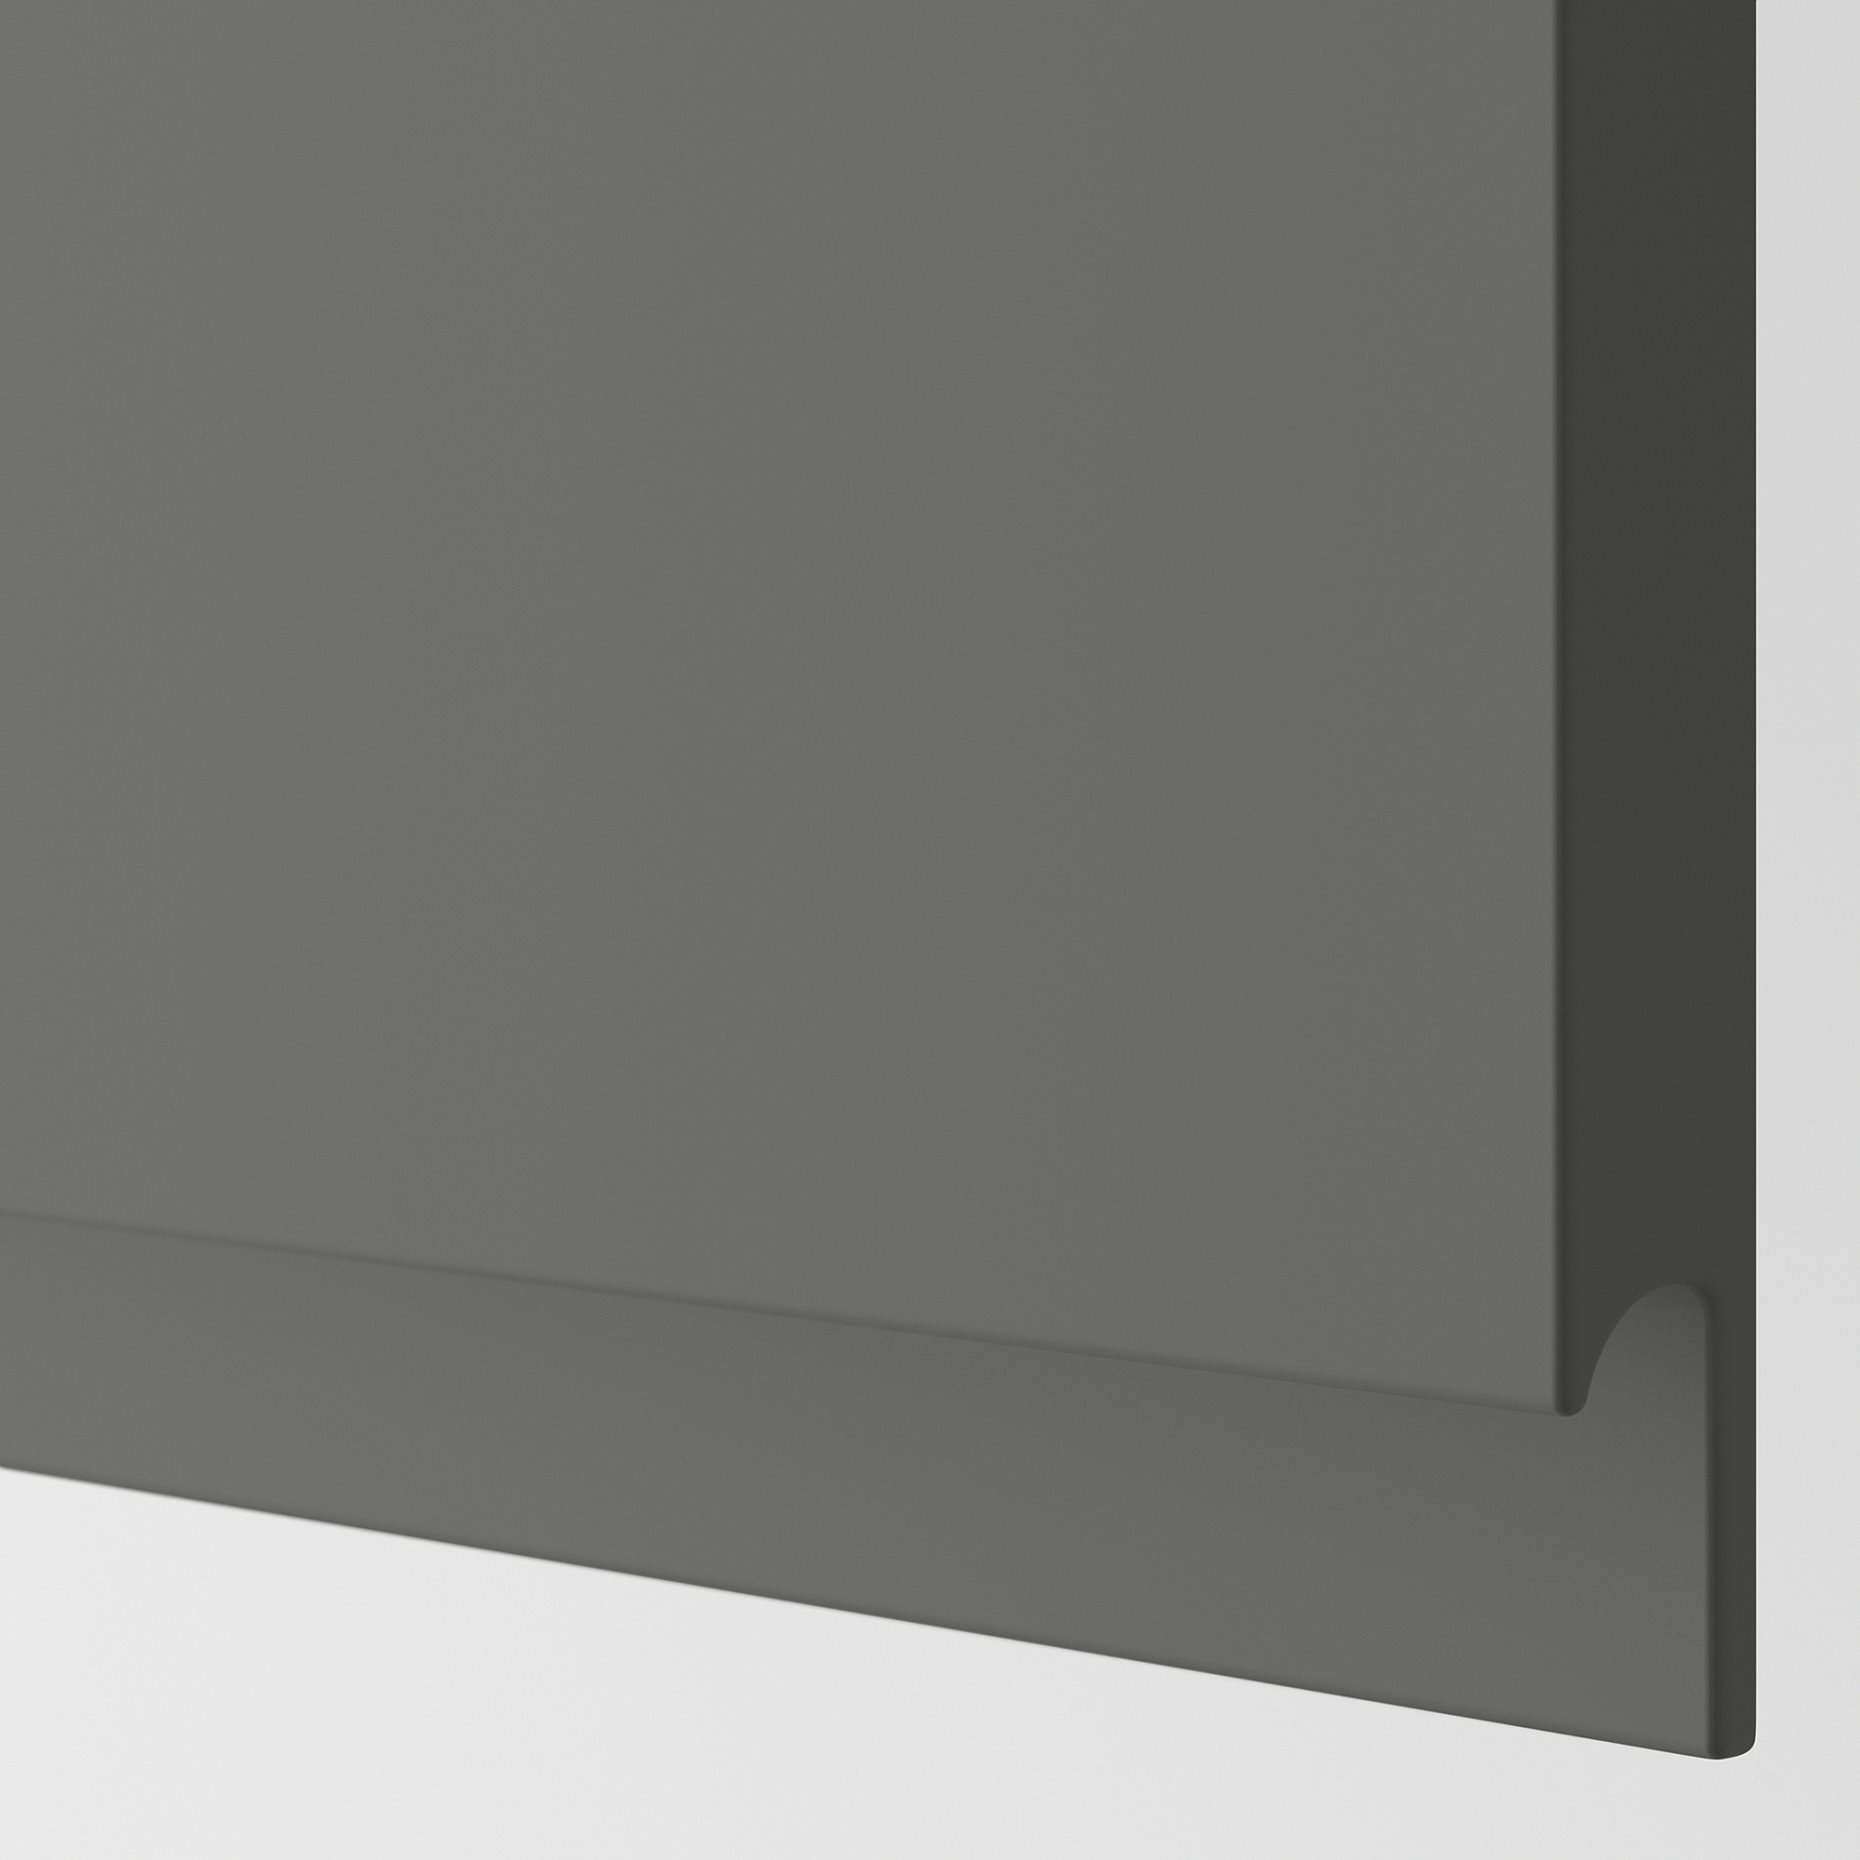 METOD, ντουλάπι βάσης για νεροχύτη με 2 πόρτες/πρόσοψη, 80x60 cm, 394.700.47